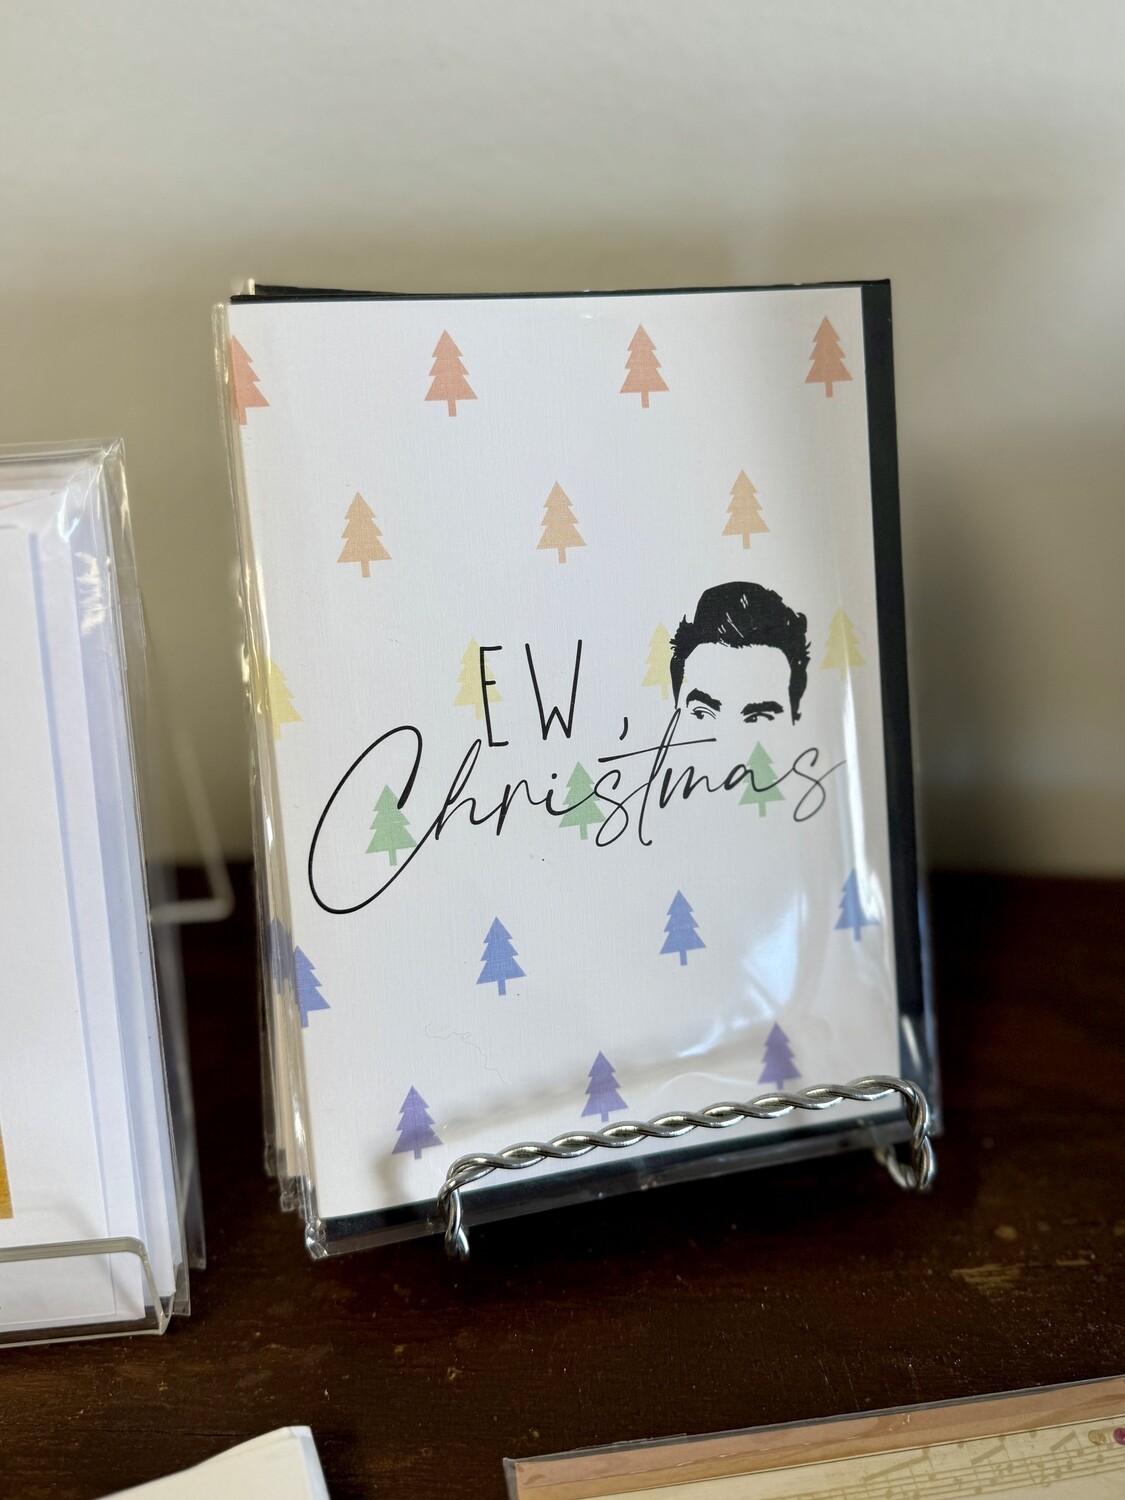 Schitt's Creek Ew, Christmas Greeting Card